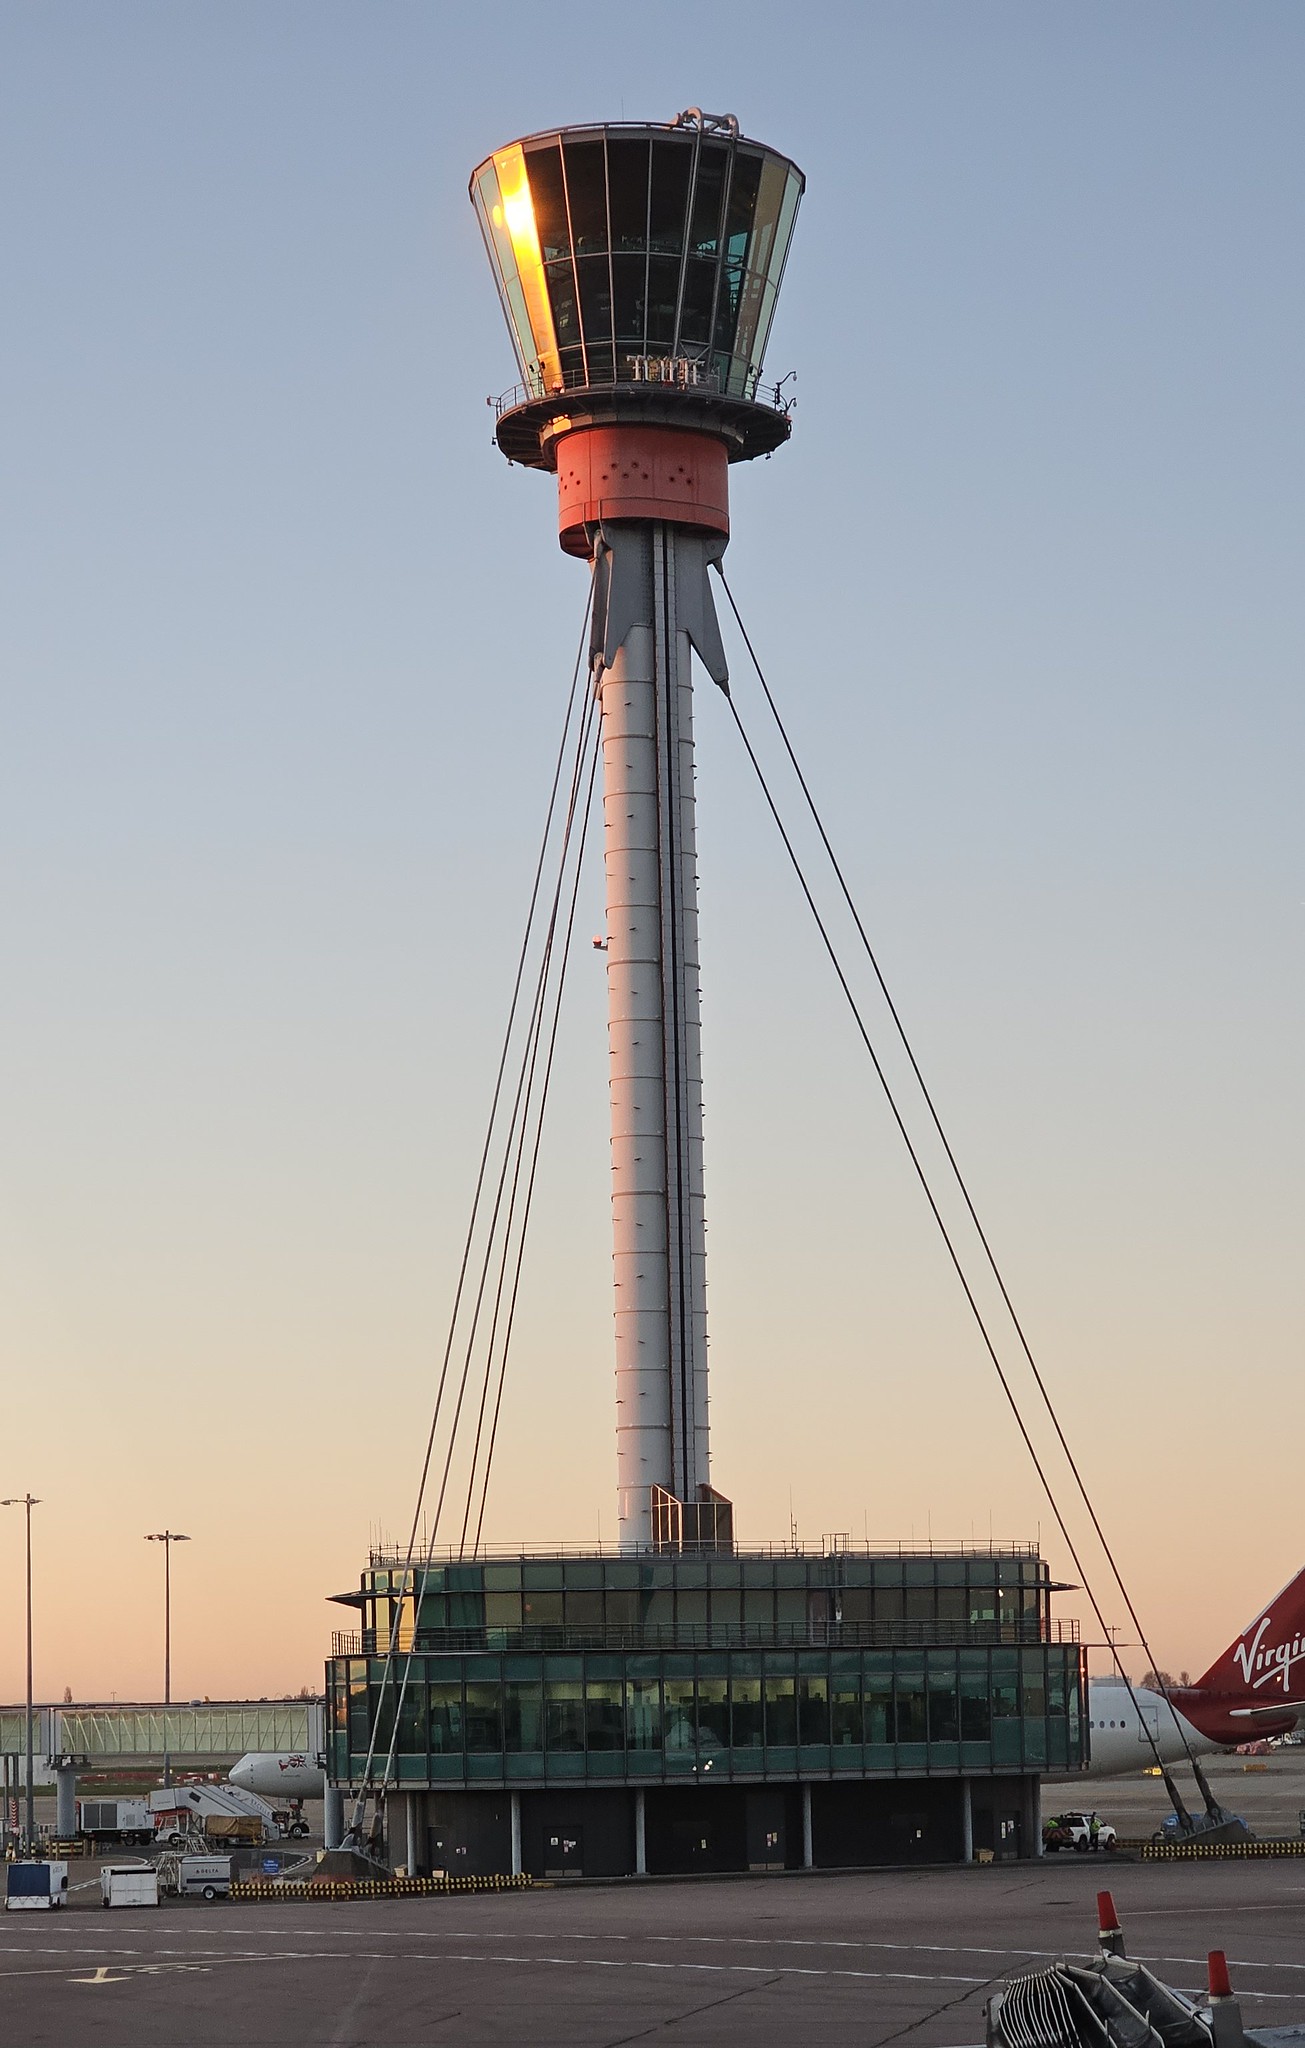 The ATC tower at Heathrow